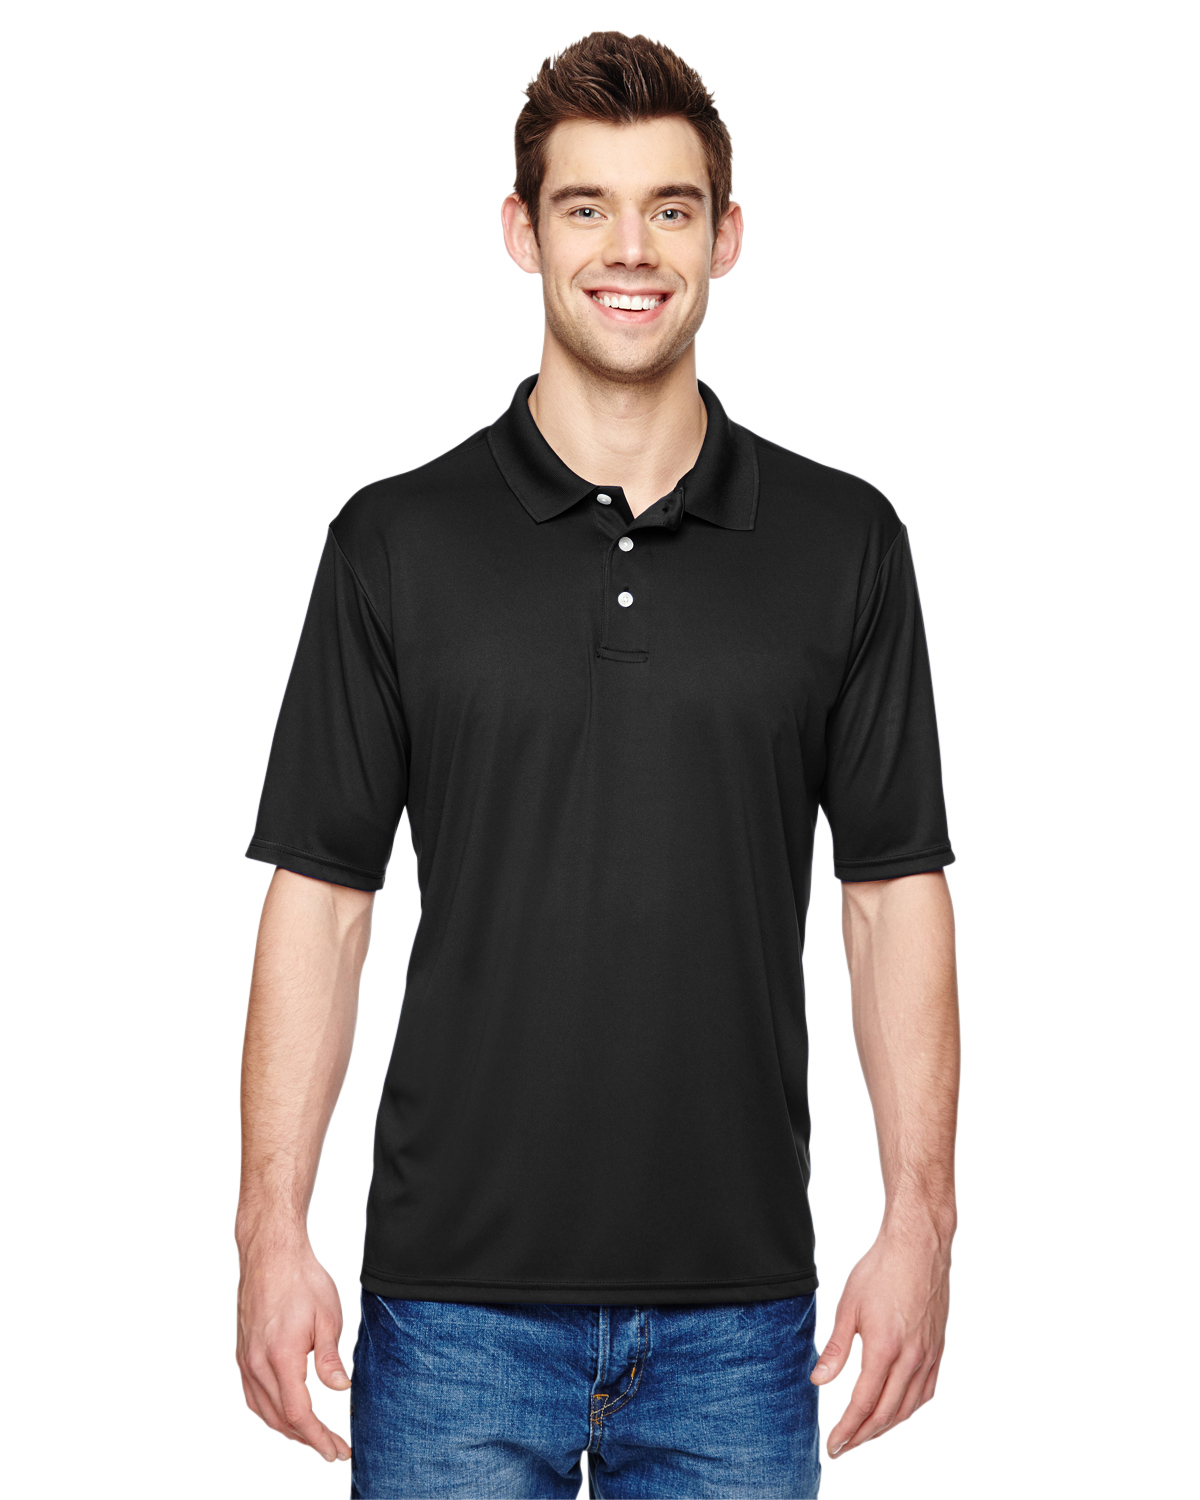 https://images.shirtspace.com/fullsize/T425ZFjqA%2BgB7wXz64pIbw%3D%3D/112906/4548-hanes-4800-men-s-4-oz-cool-dri-with-fresh-iq-polo-front-black.jpg